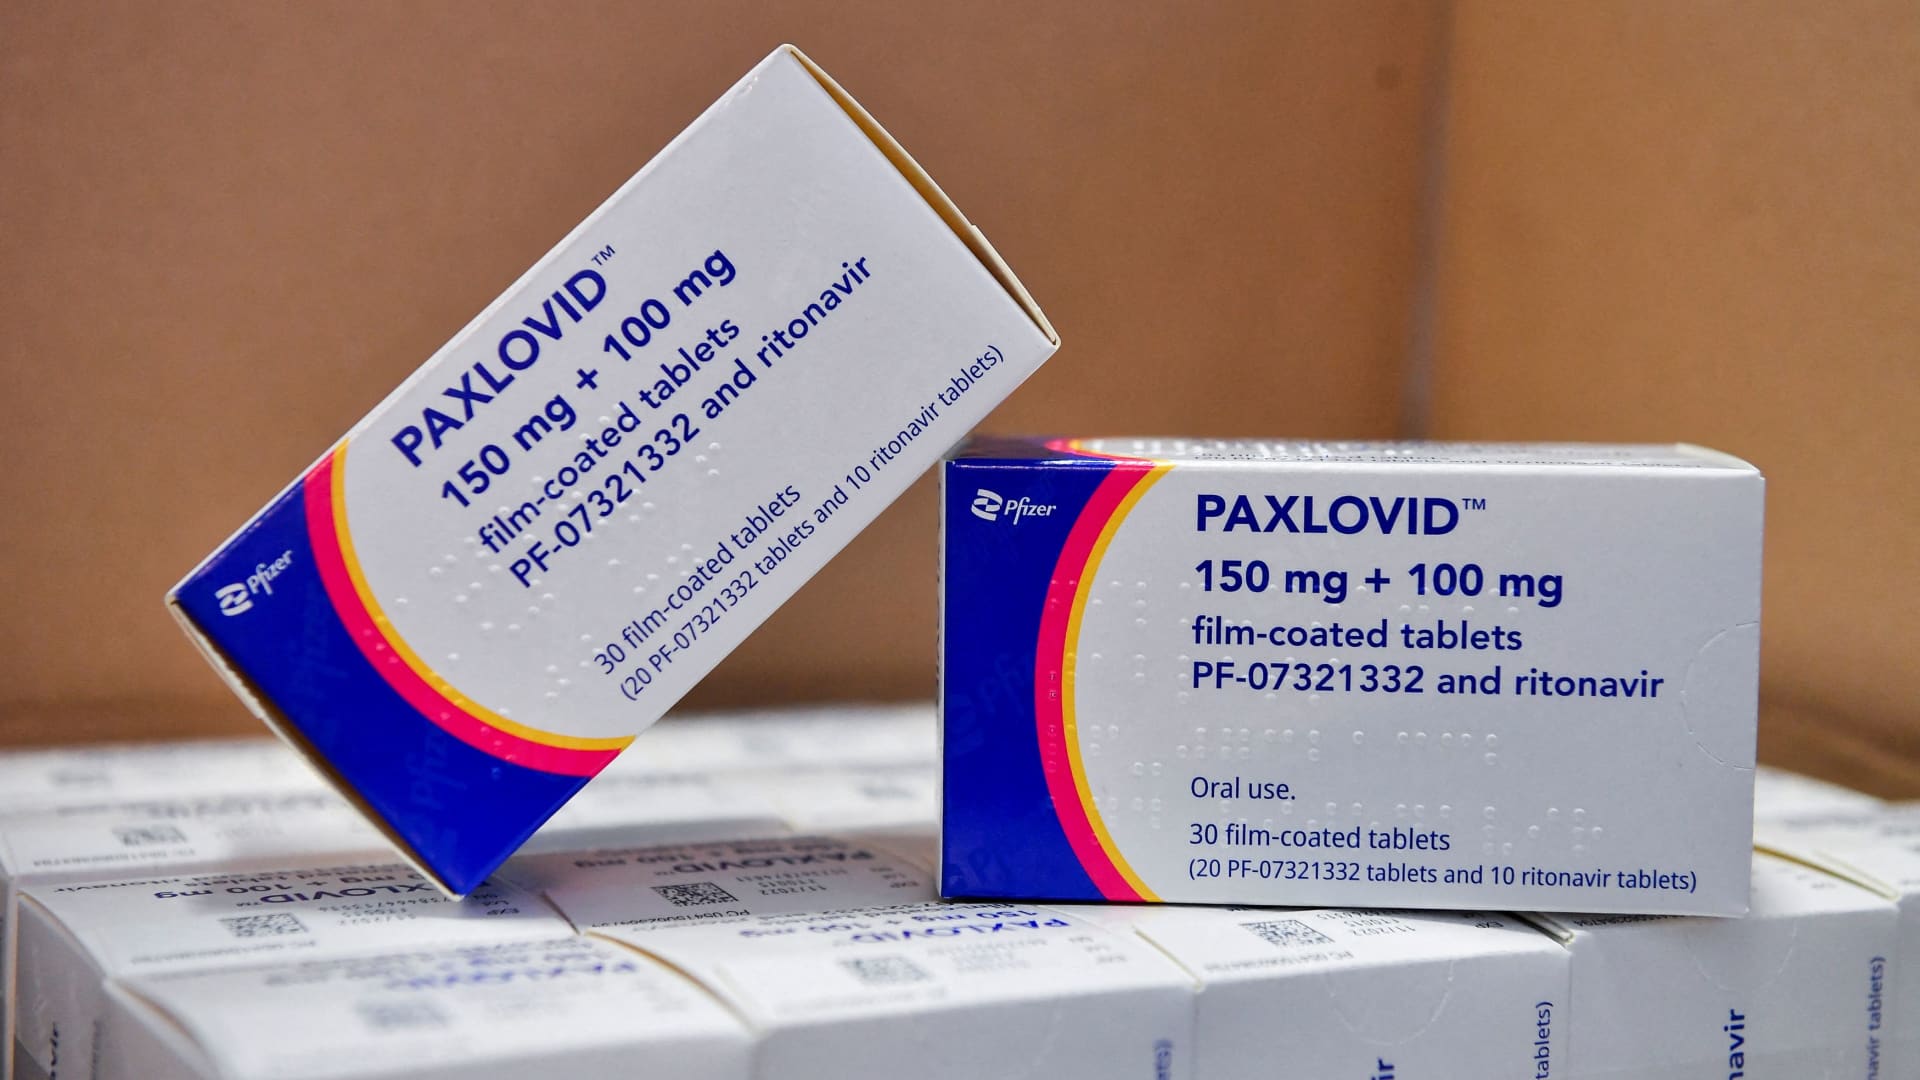 FDA grants full approval to Pfizer Covid treatment Paxlovid for high-risk adults